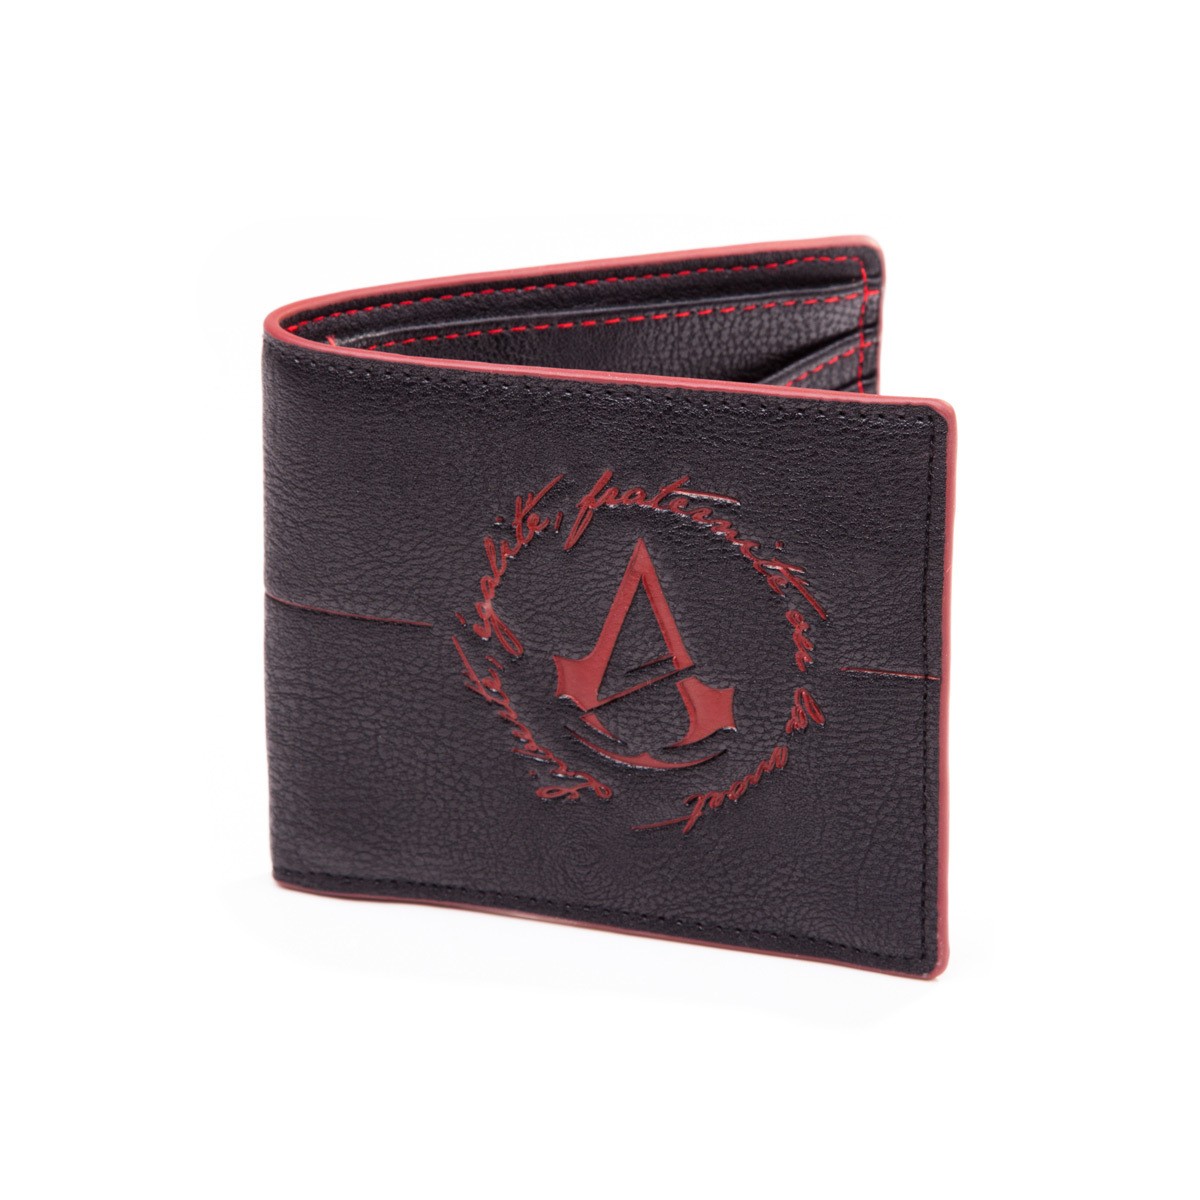 Cartera Assassin's Creed Unity por 22.00€ LaFrikileria.com